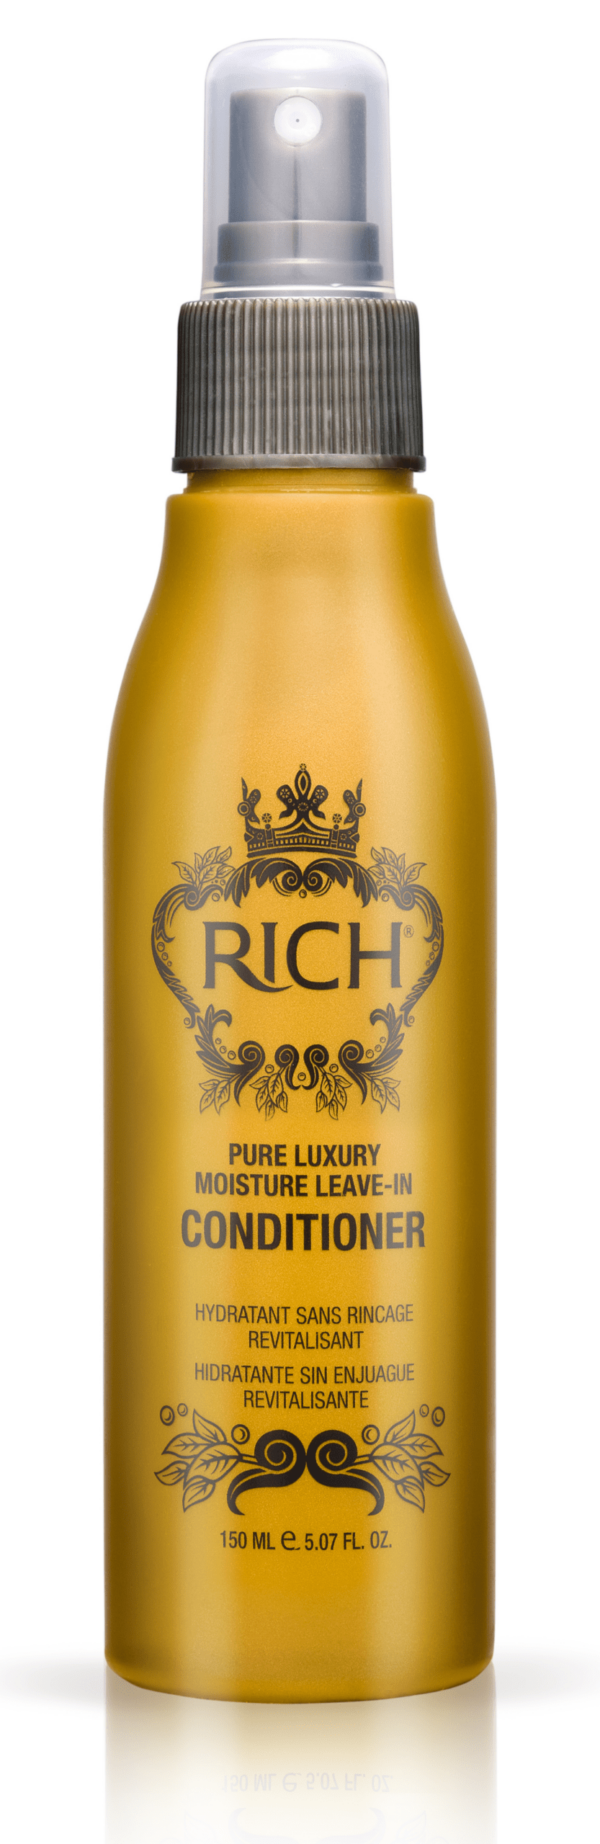 Rich Pure Luxury Moisture Leave-in Conditioner 150 ml-0